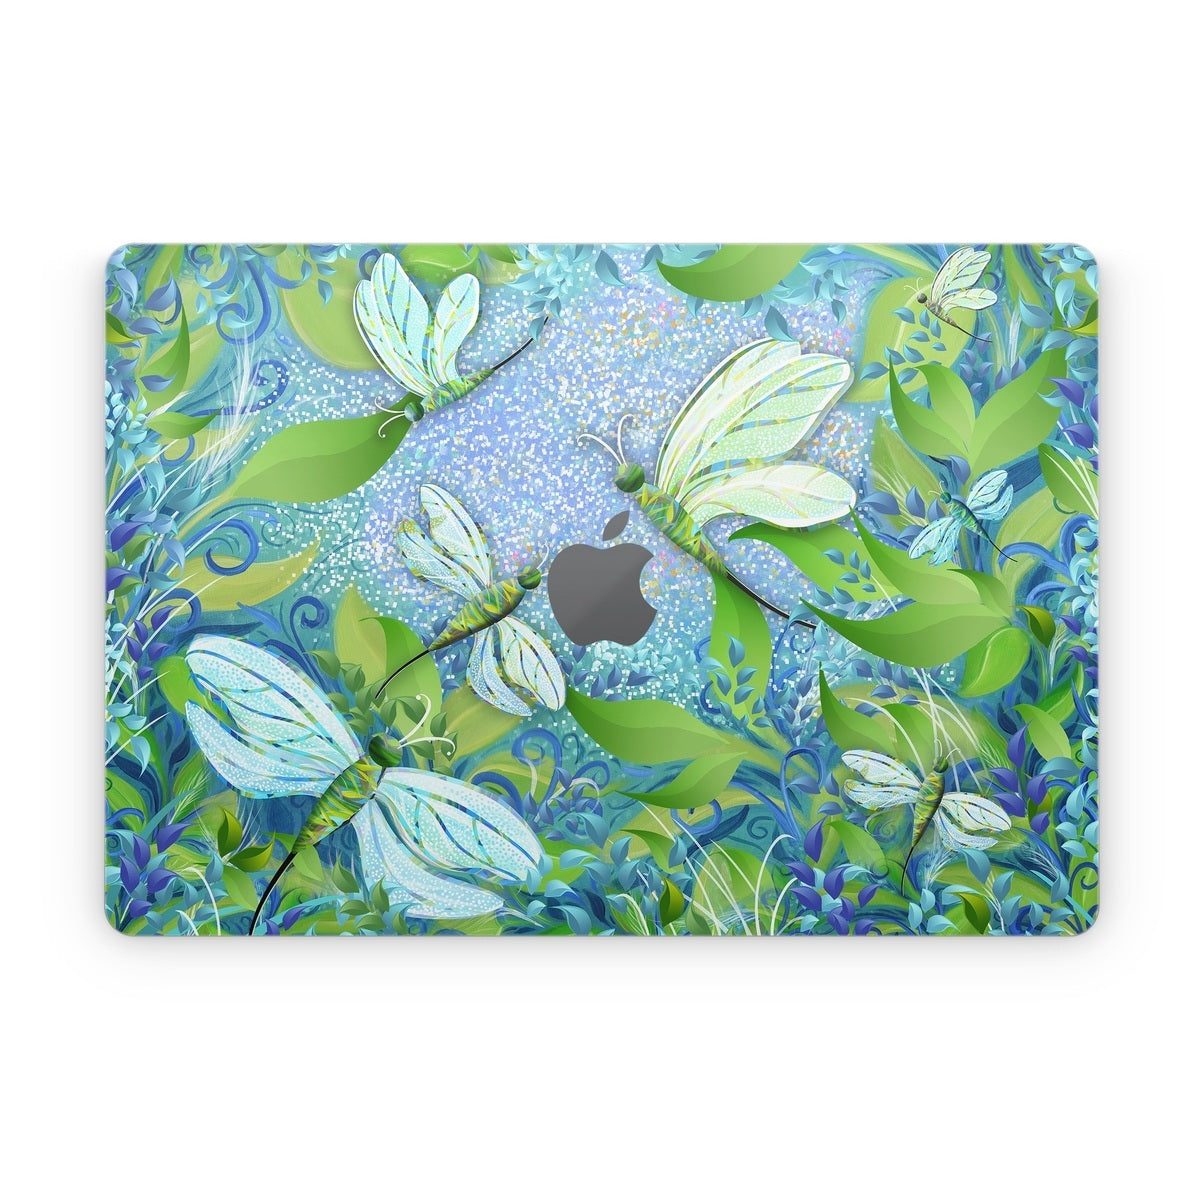 Dragonfly Fantasy - Apple MacBook Skin